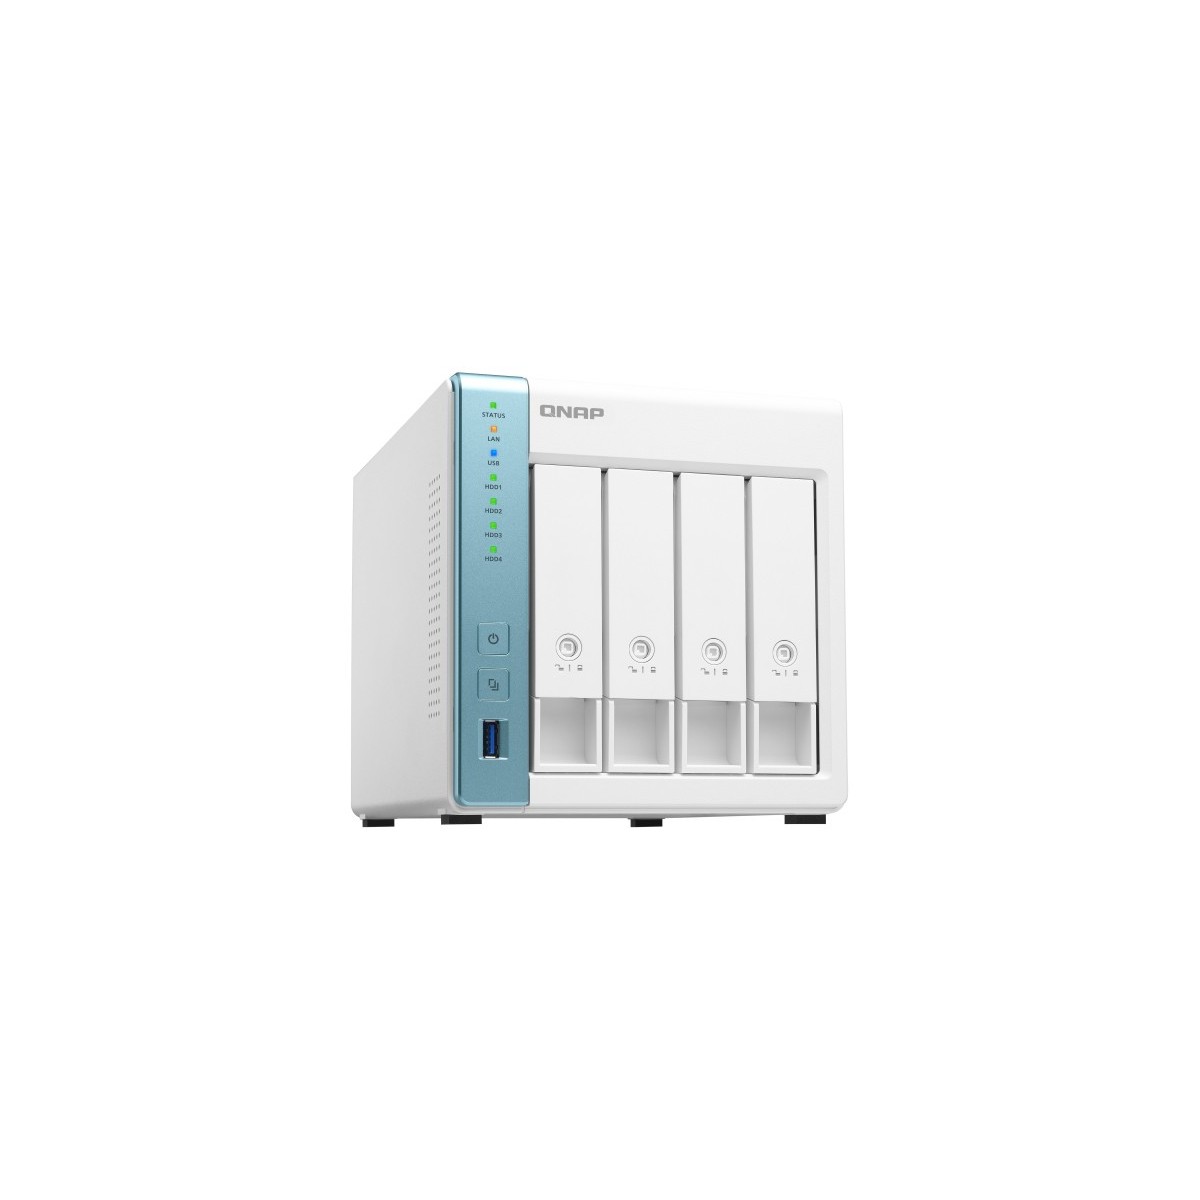 QNAP TS-431P3 NAS Storage server